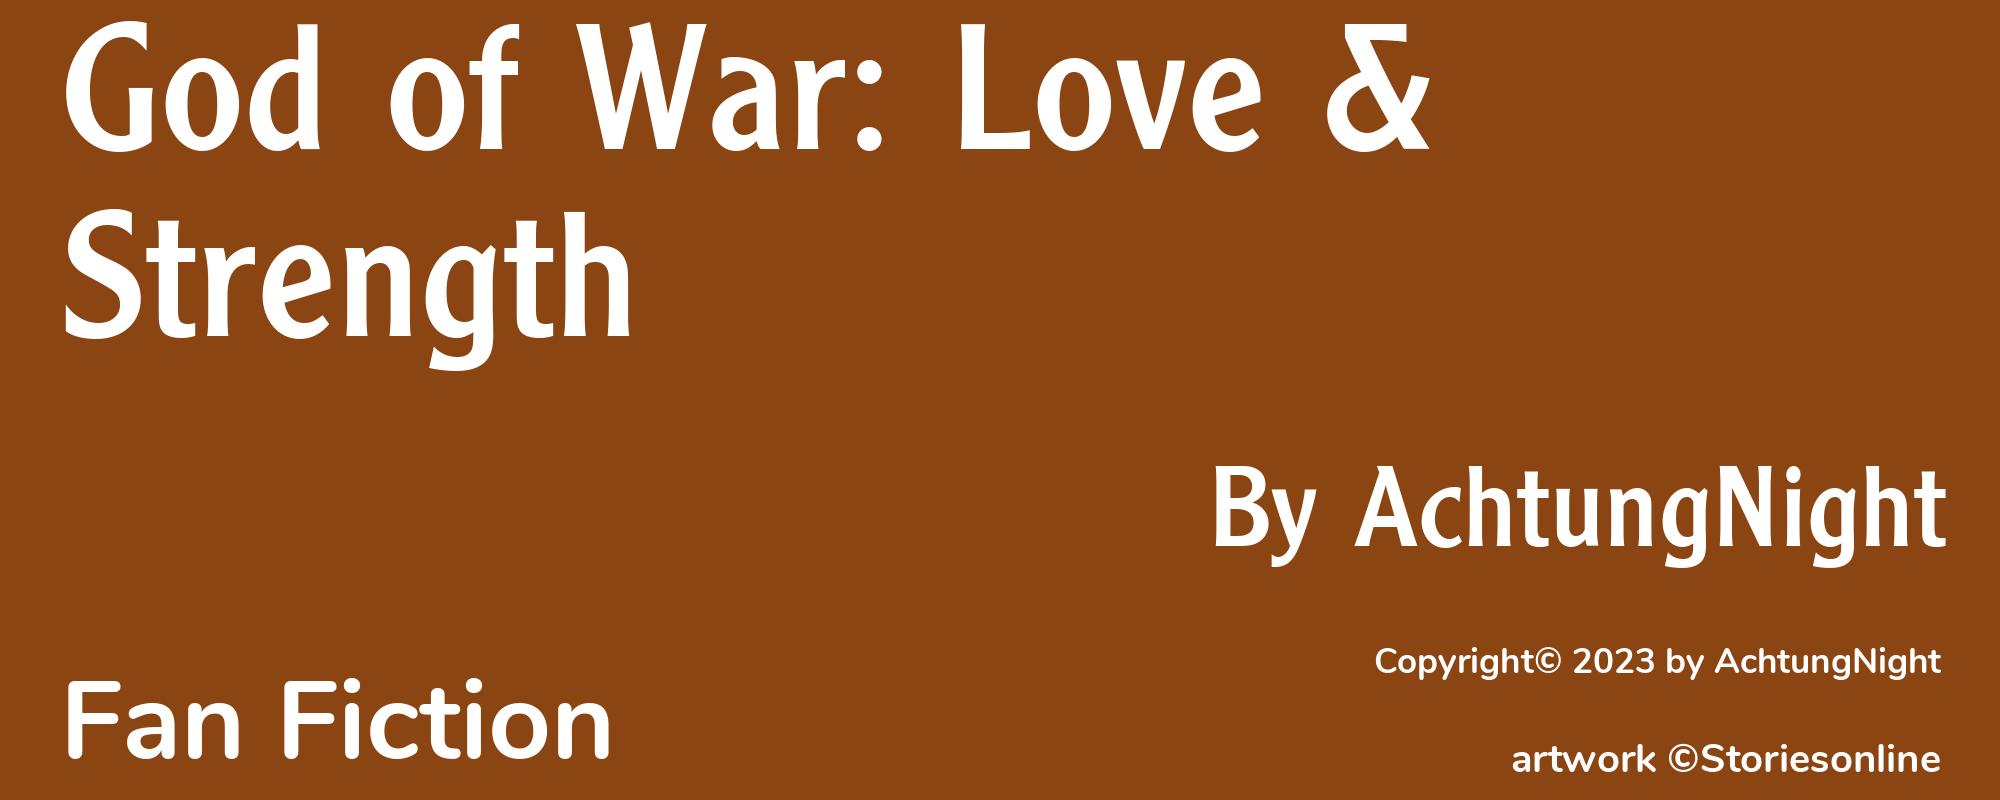 God of War: Love & Strength - Cover